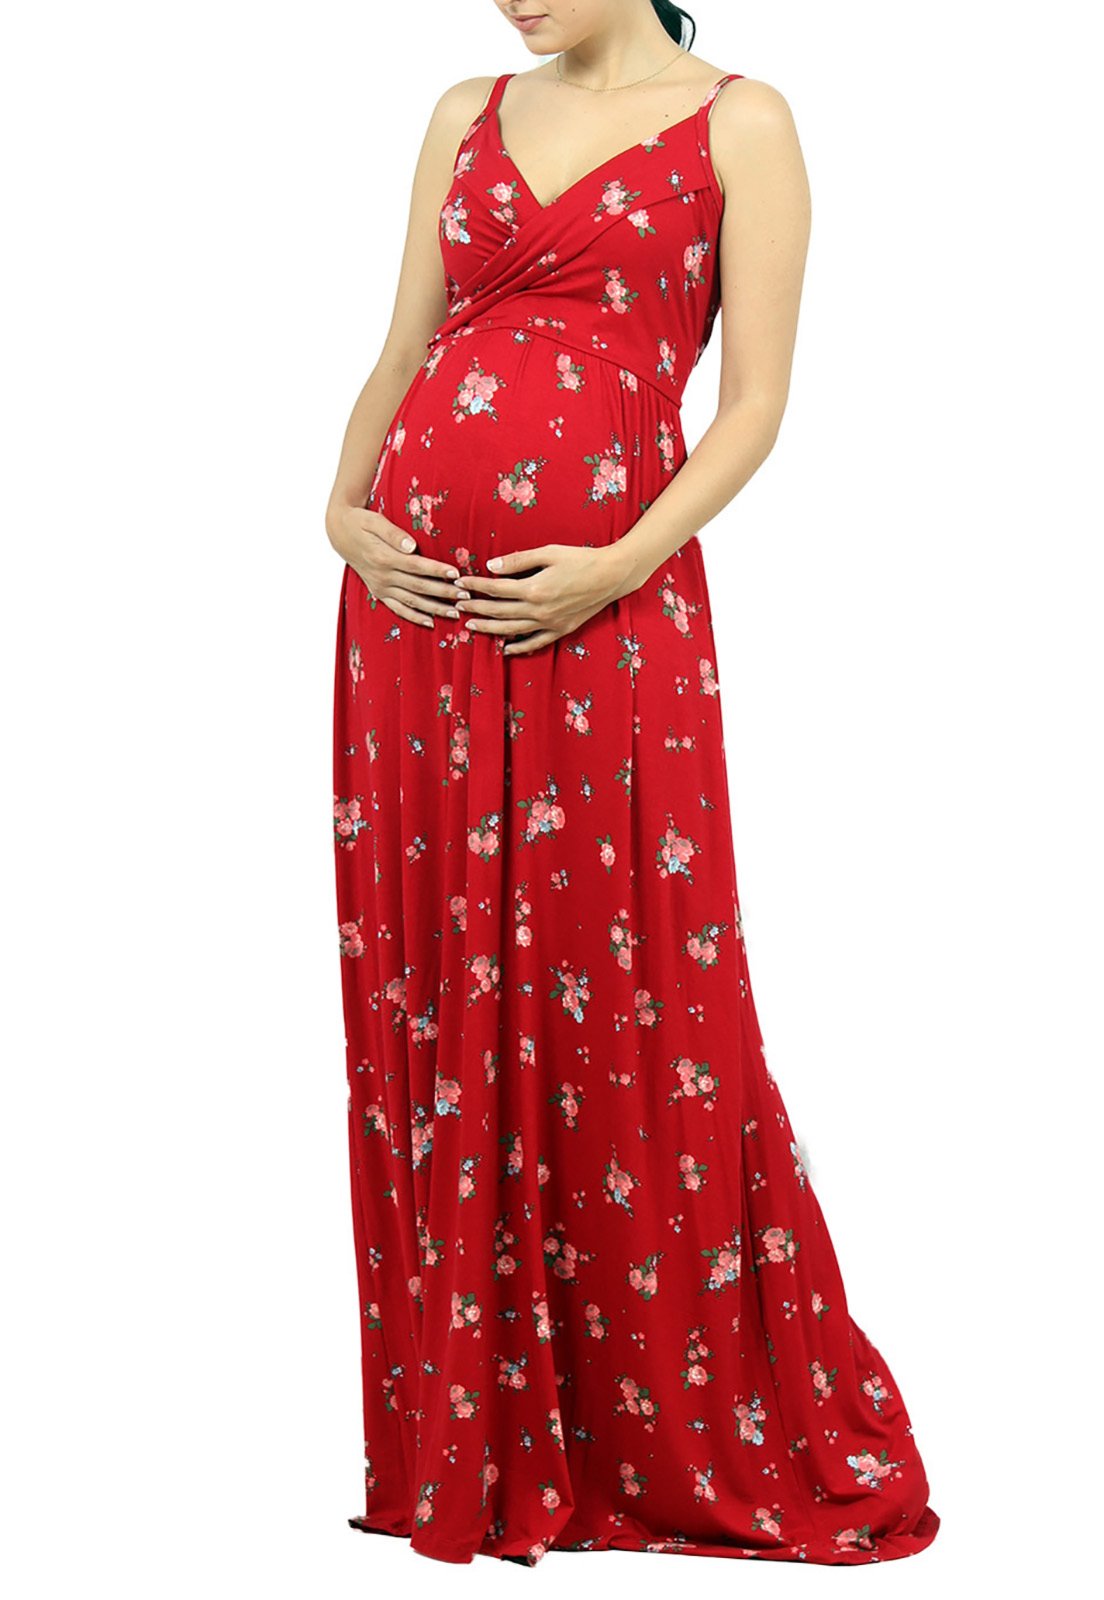 modelo de vestido longo para gravida